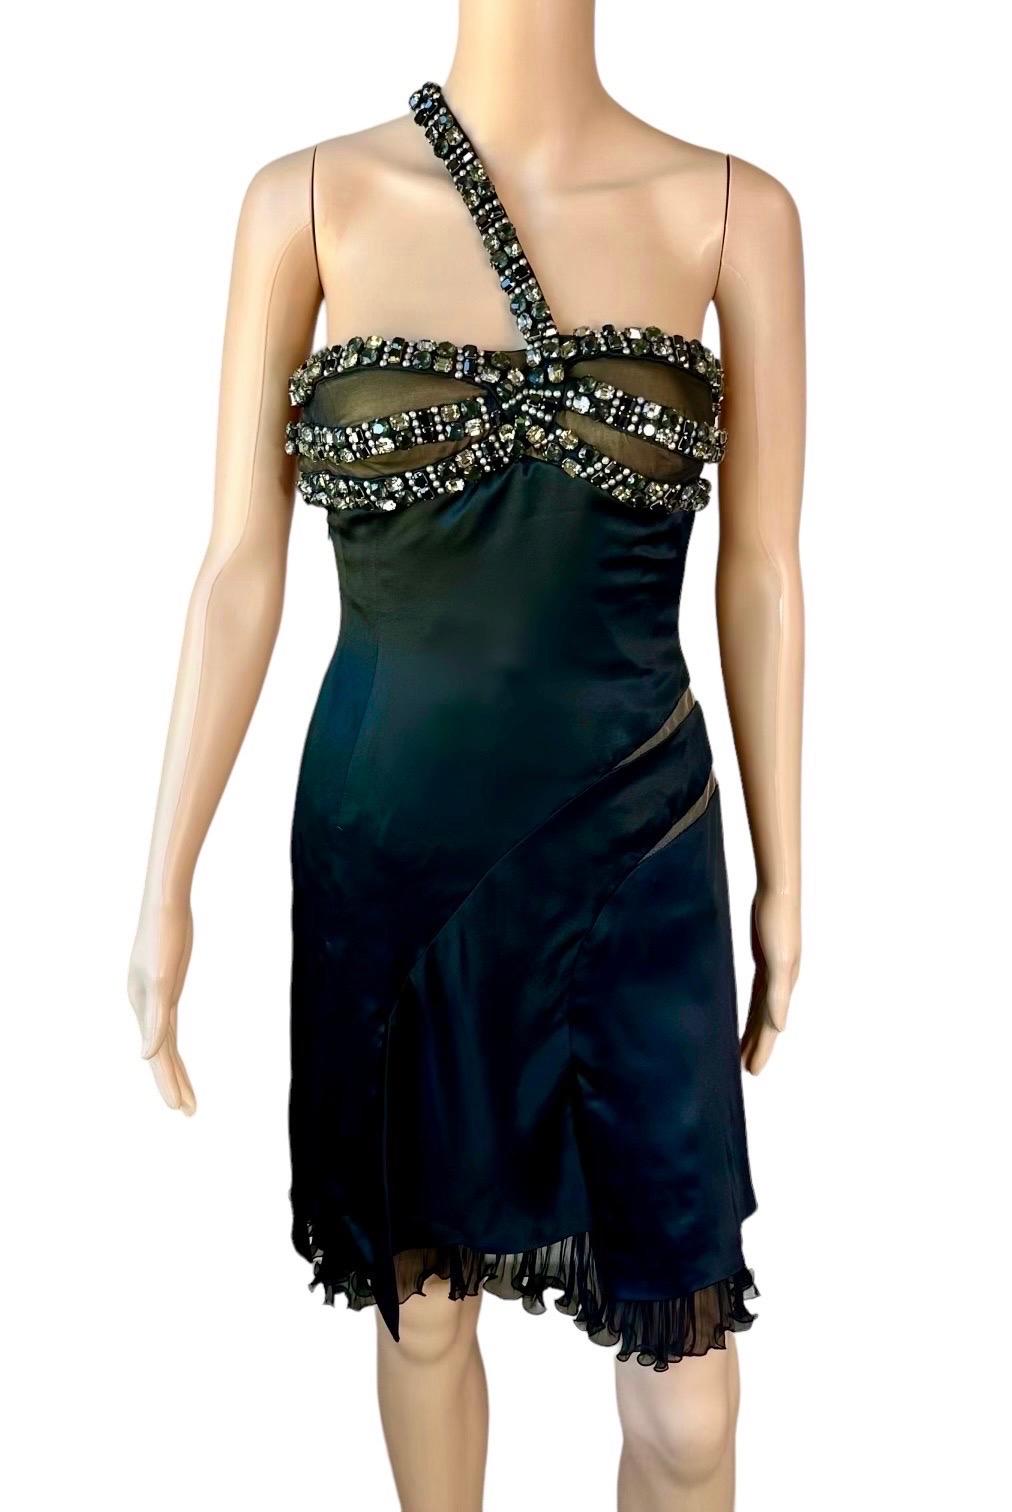 Atelier Versace F/W 2004 Runway Embellished Silk Black Evening Mini Dress IT 40

FOLLOW US ON INSTAGRAM @OPULENTADDICT